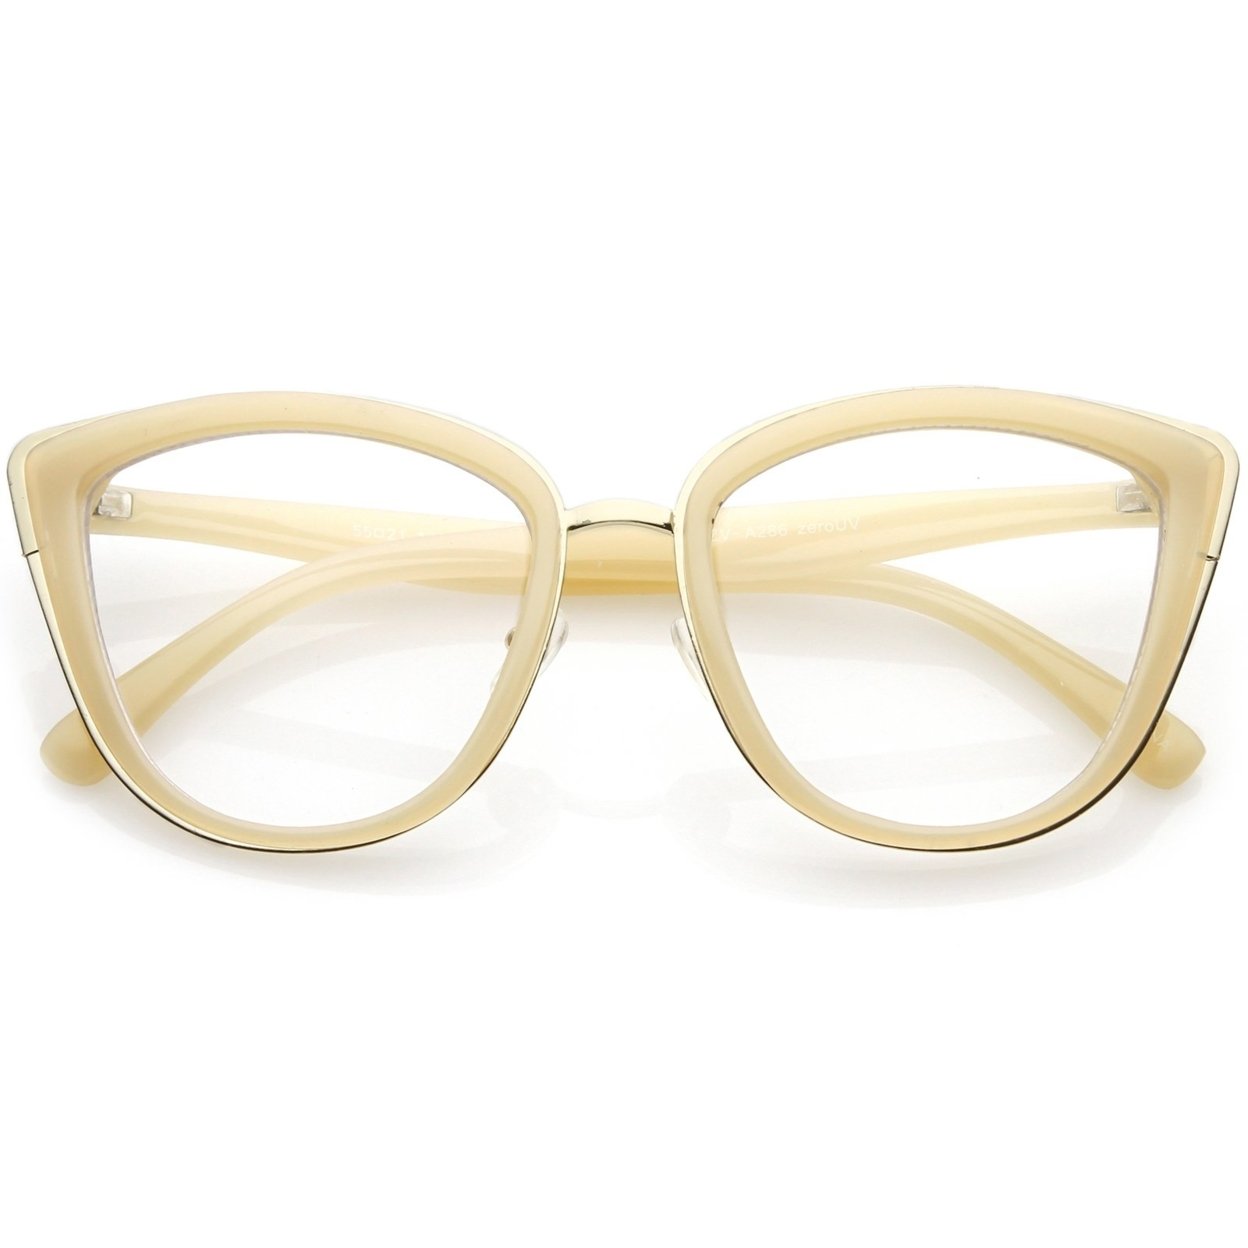 Oversize Rimmed Metal Cat Eye Glasses Clear Lens 55mm - Tortoise Gold / Clear